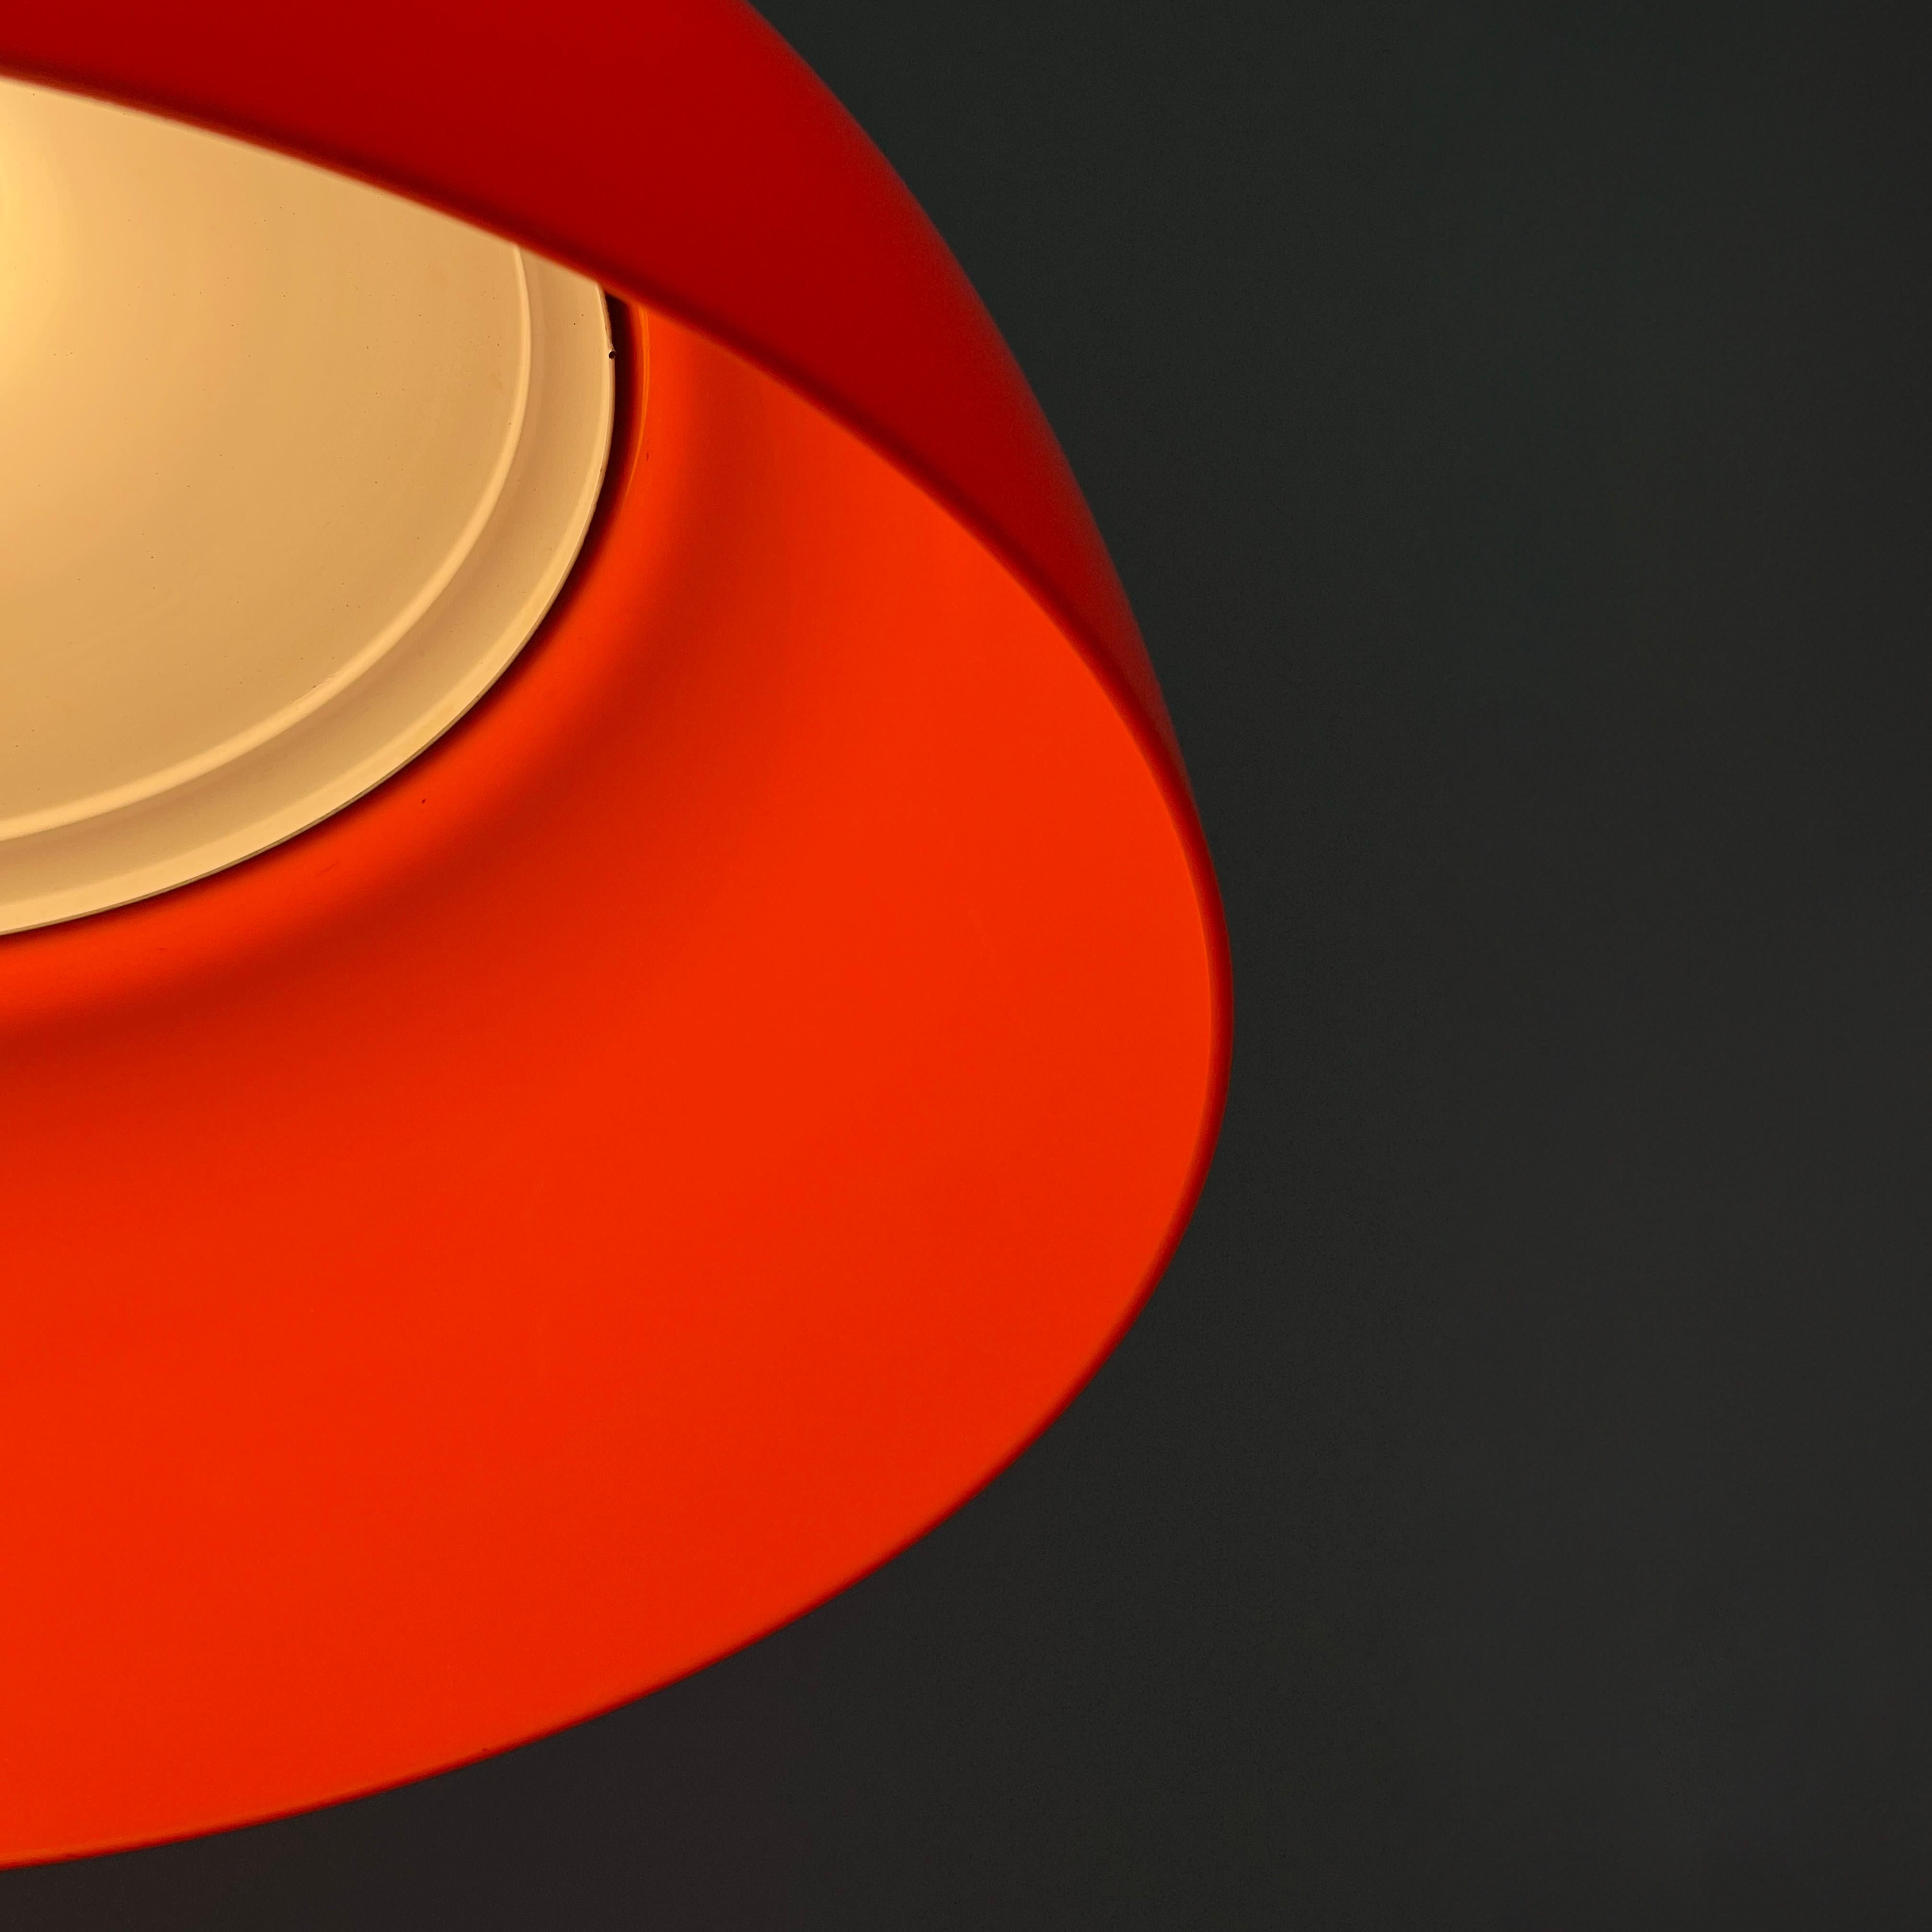 Acrylic KD7 Orange Pendant Lamp by Achille & Pier Giacomo Castiglioni for Kartell, Italy For Sale